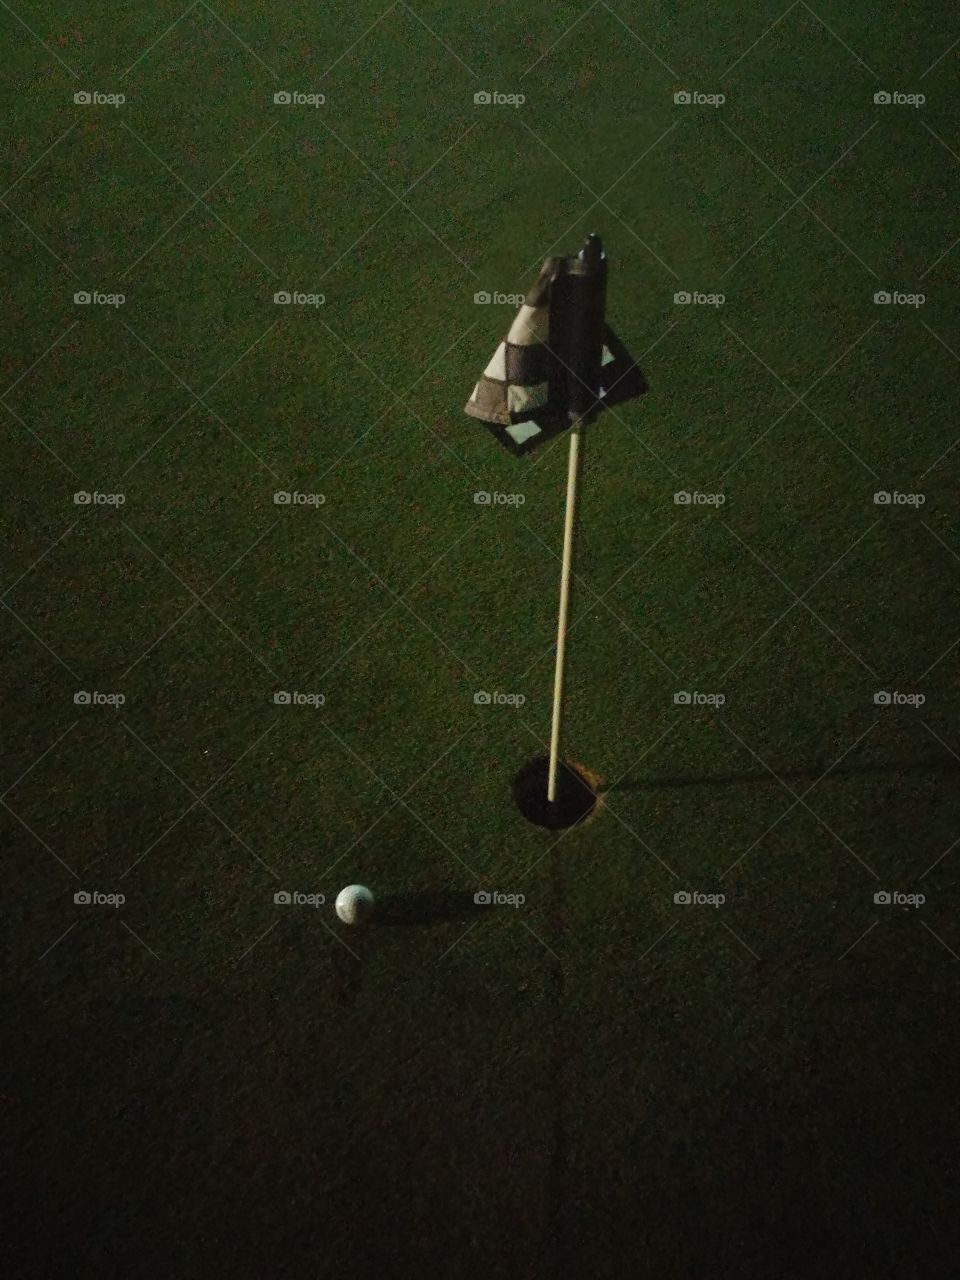 Golf at night